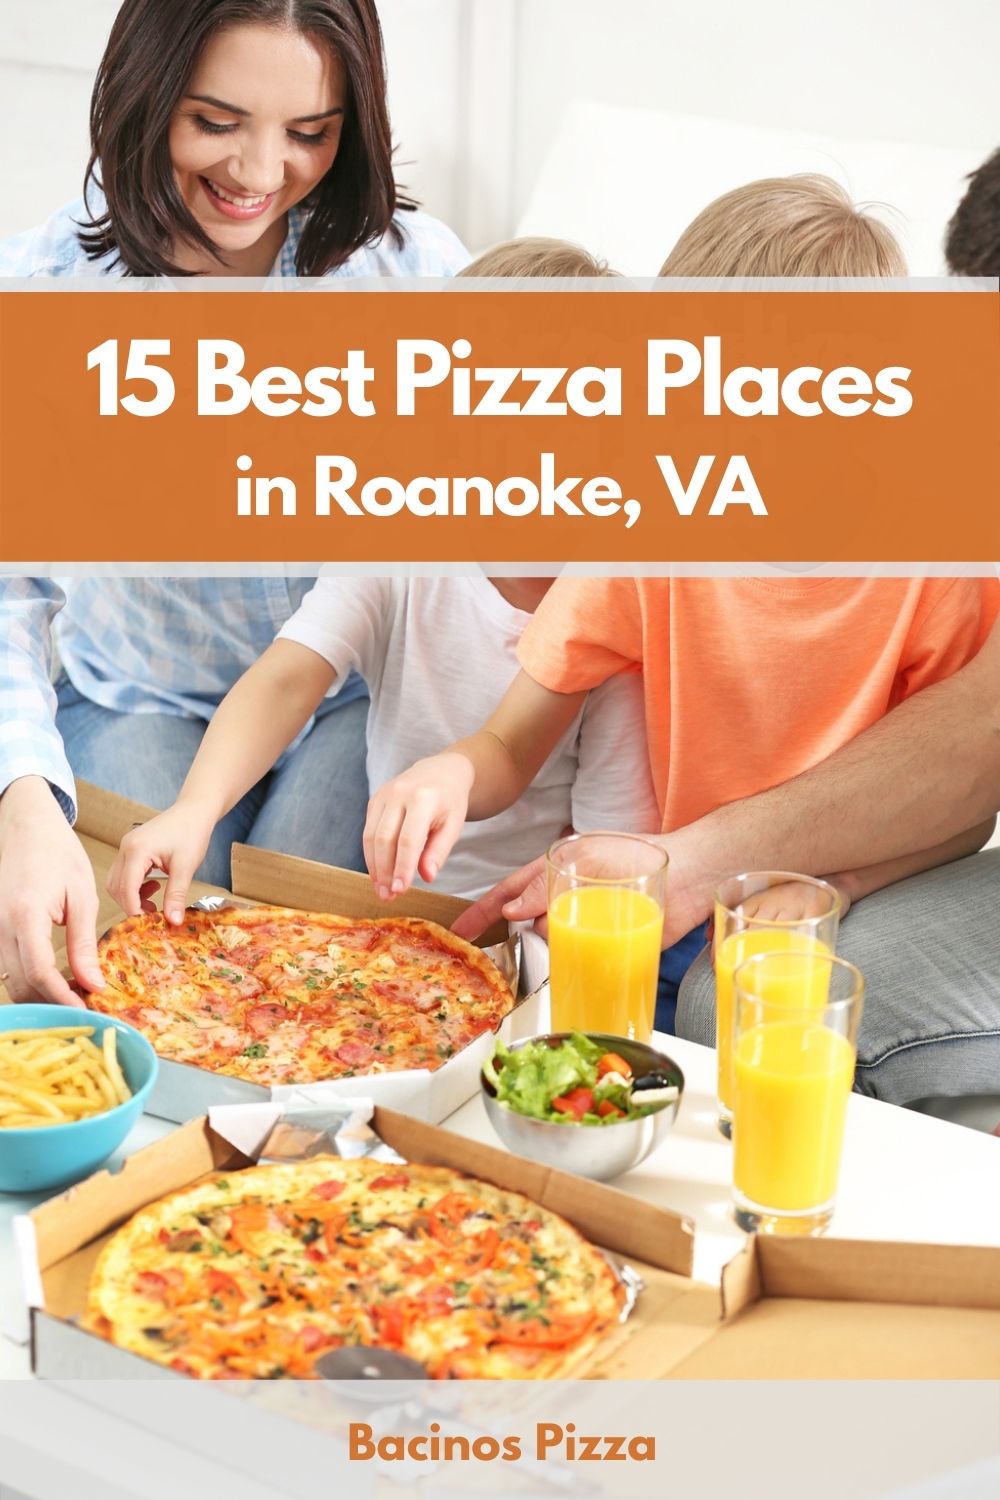 15 Best Pizza Places in Roanoke, VA pin